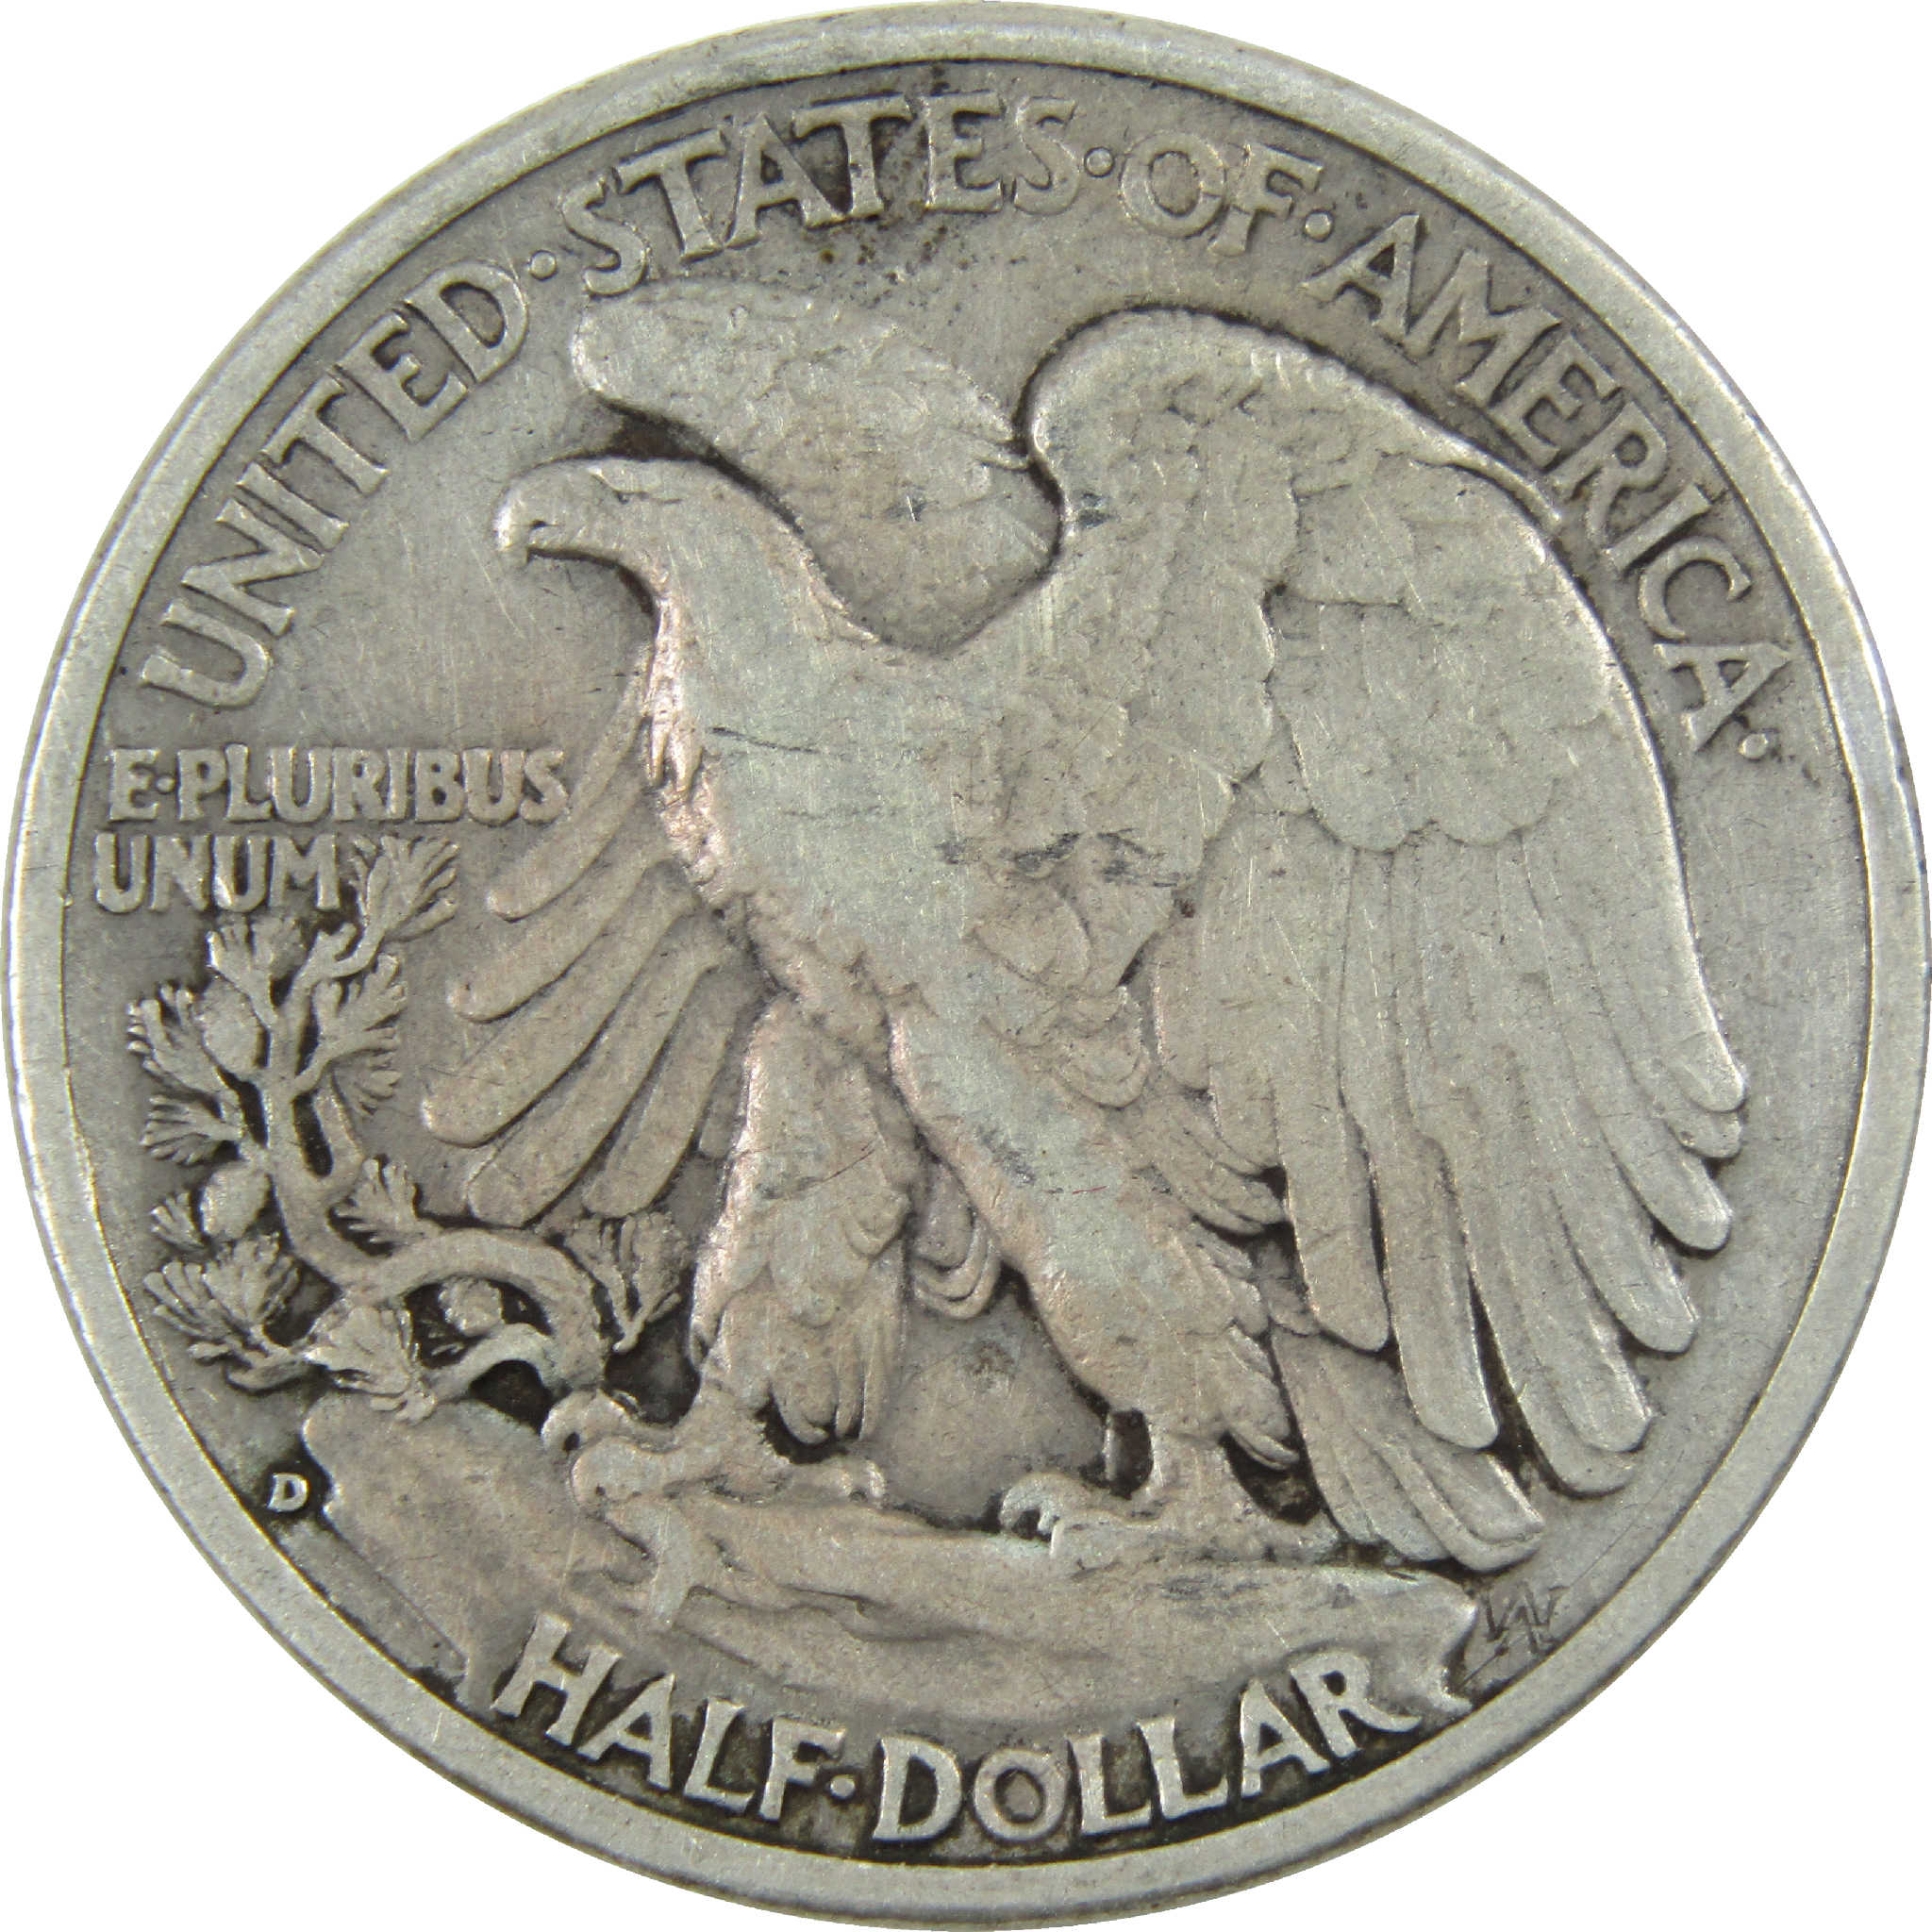 1938 D Liberty Walking Half Dollar F Fine Silver 50c Coin SKU:I12355